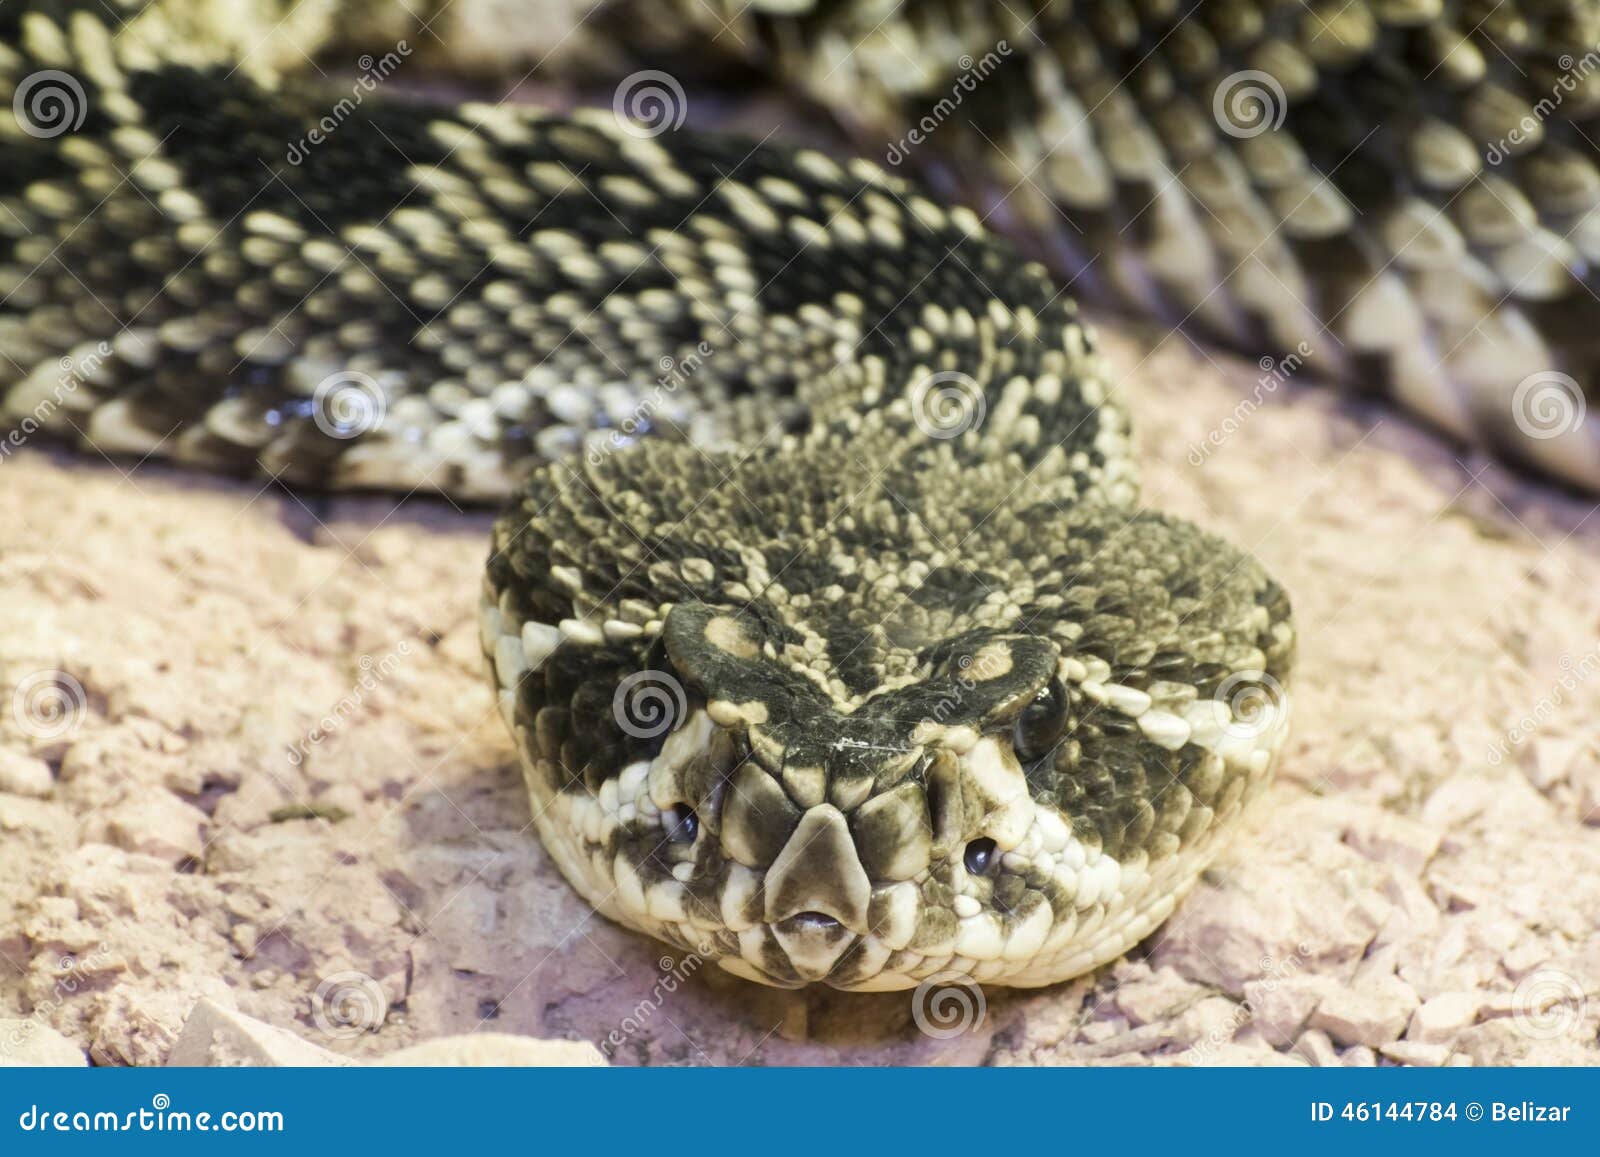 eastern diamondback rattlesnake (crotalus adamanteus)